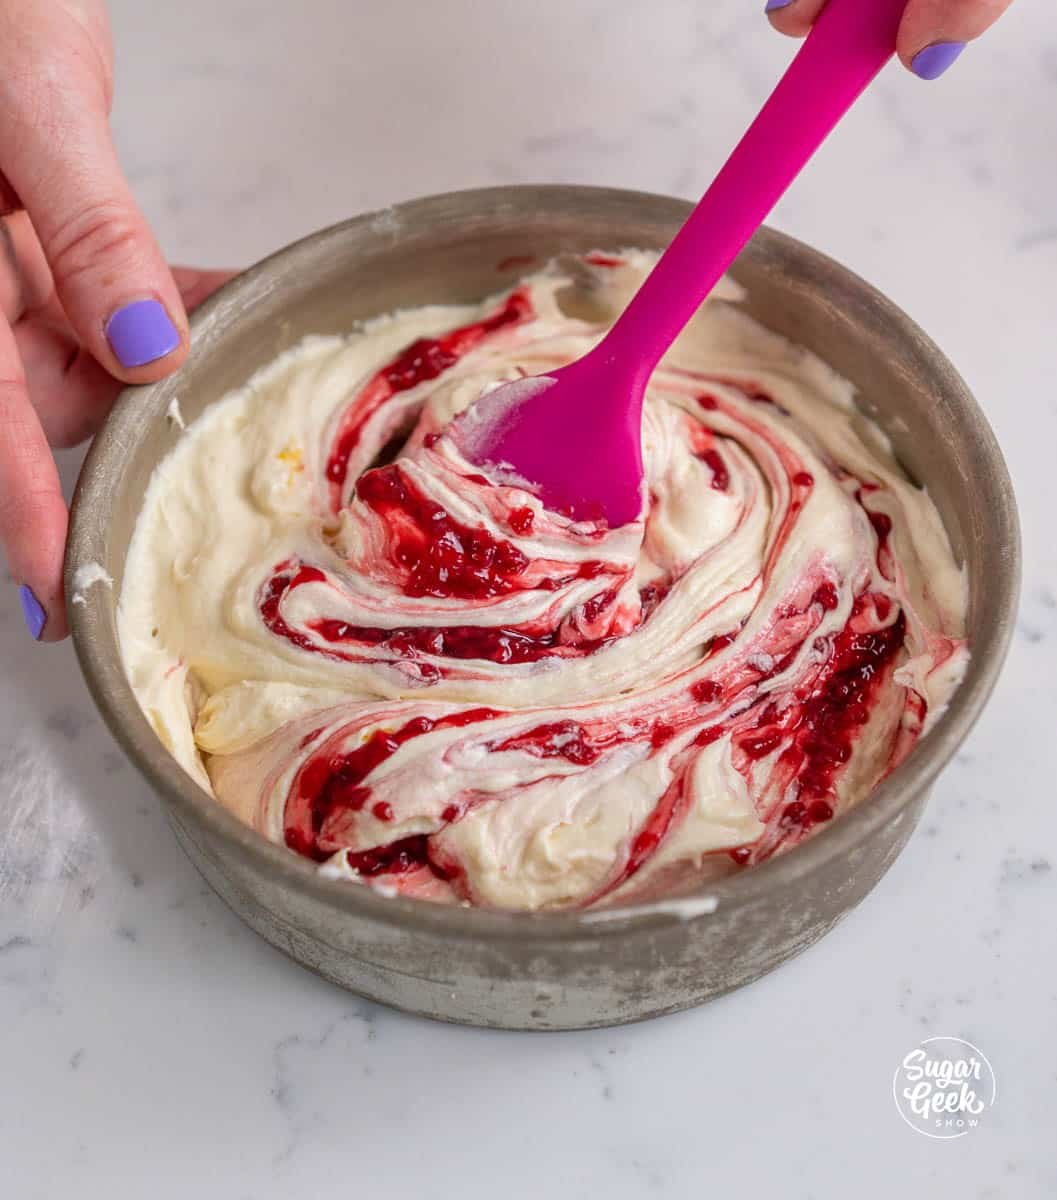 swirling raspberry puree into cake batter